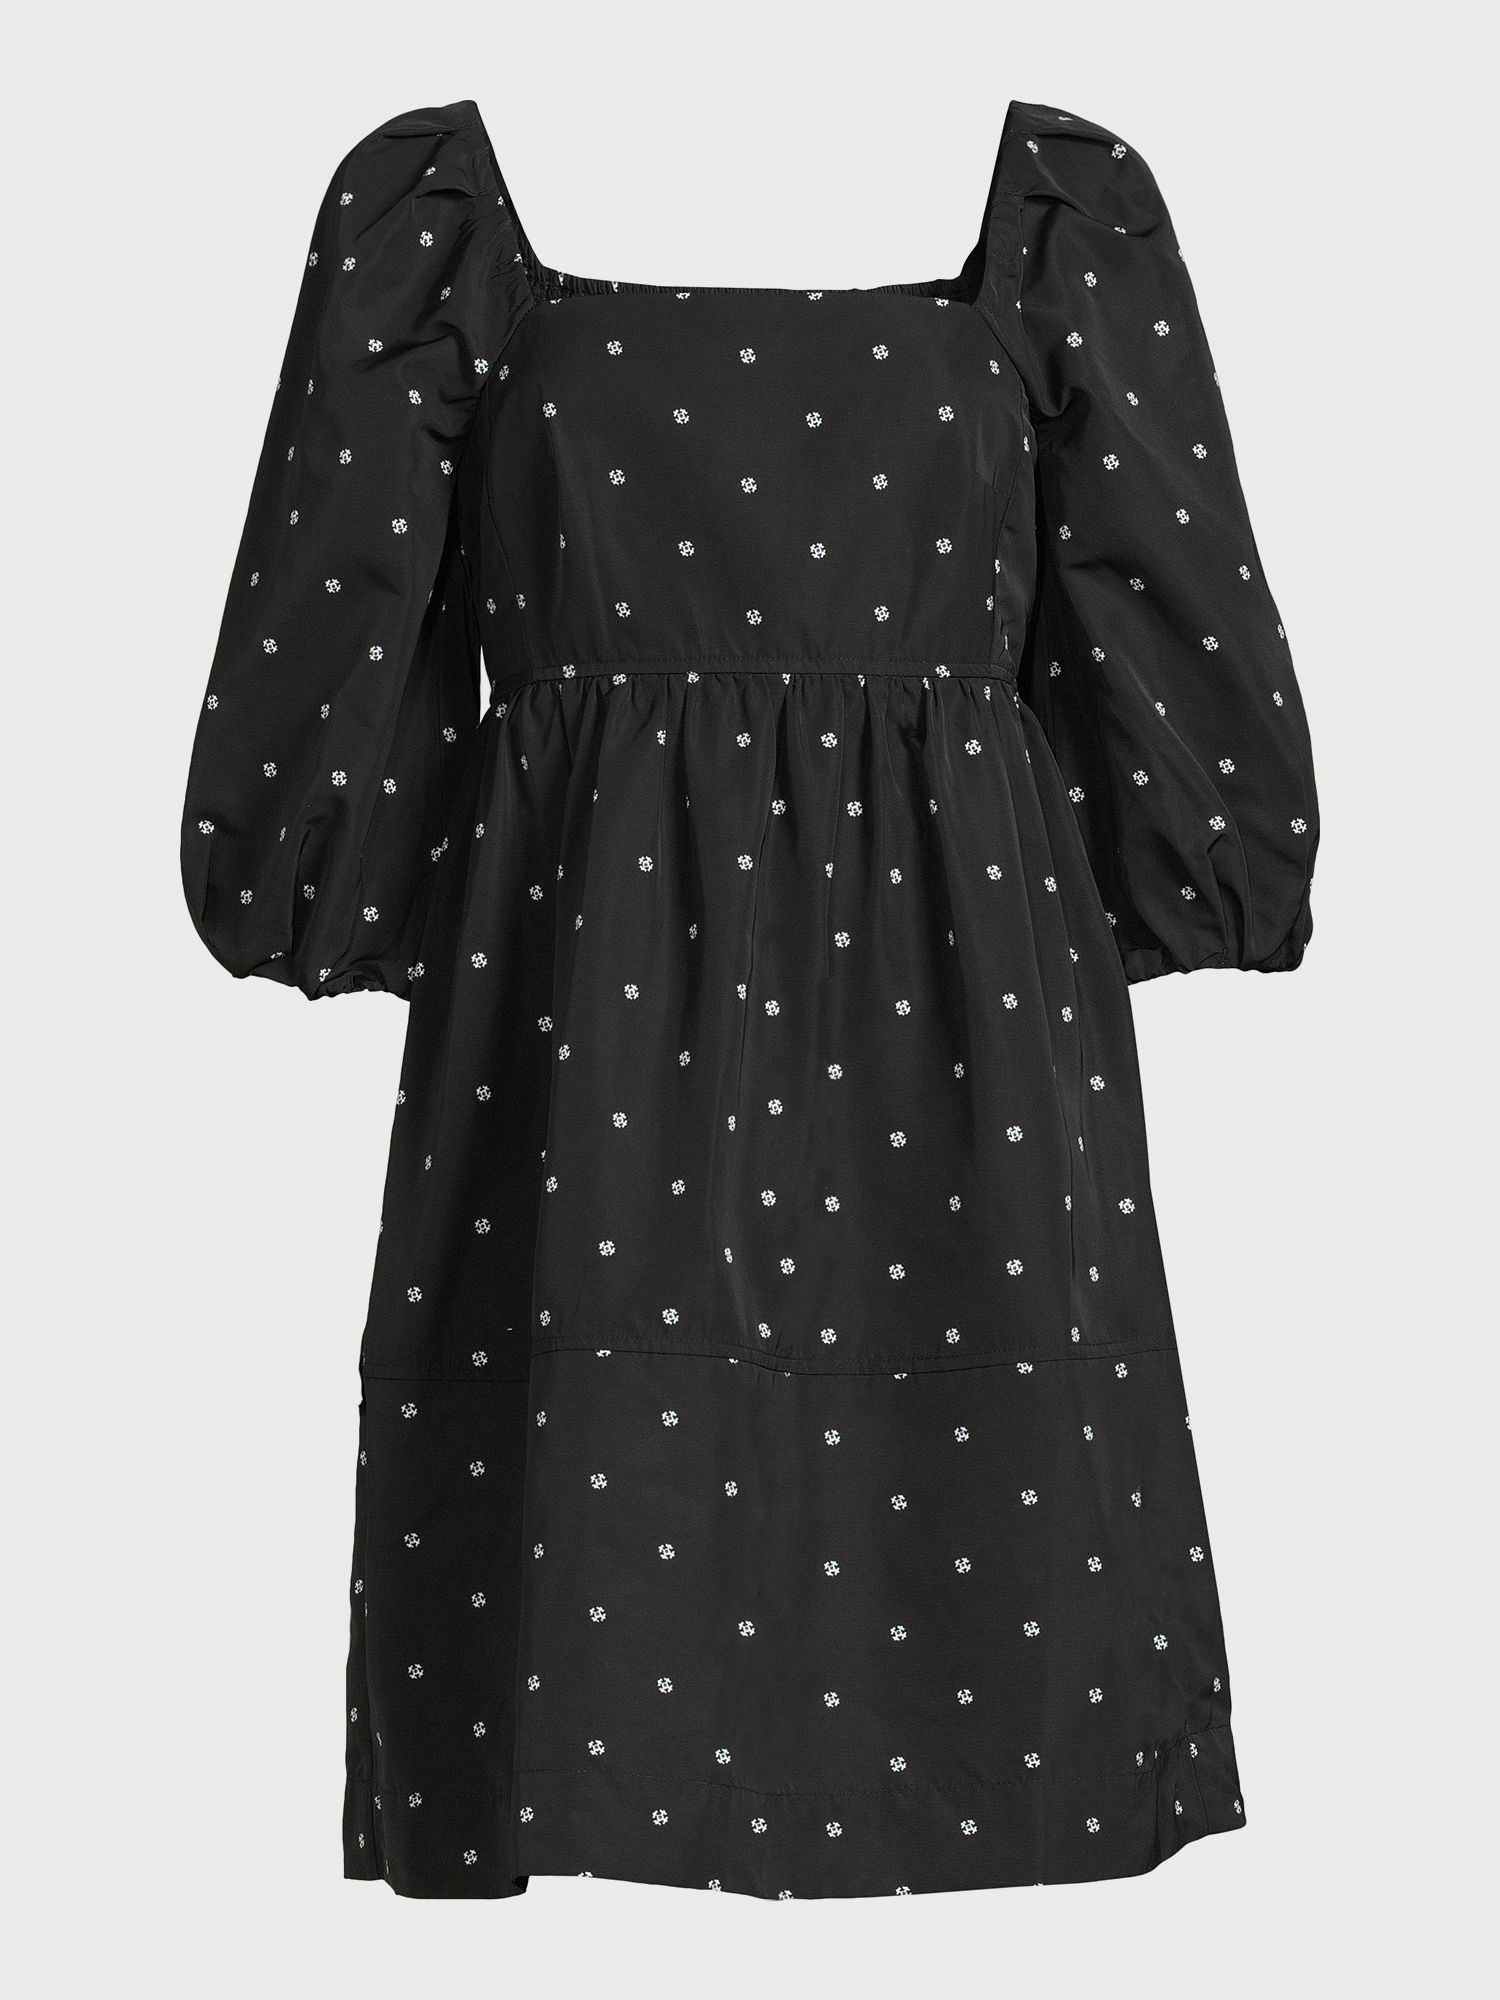 Free Assembly Women's Square-Neck Mini Dress with ¾ Sleeves, Sizes XS-XXXL | Walmart (US)